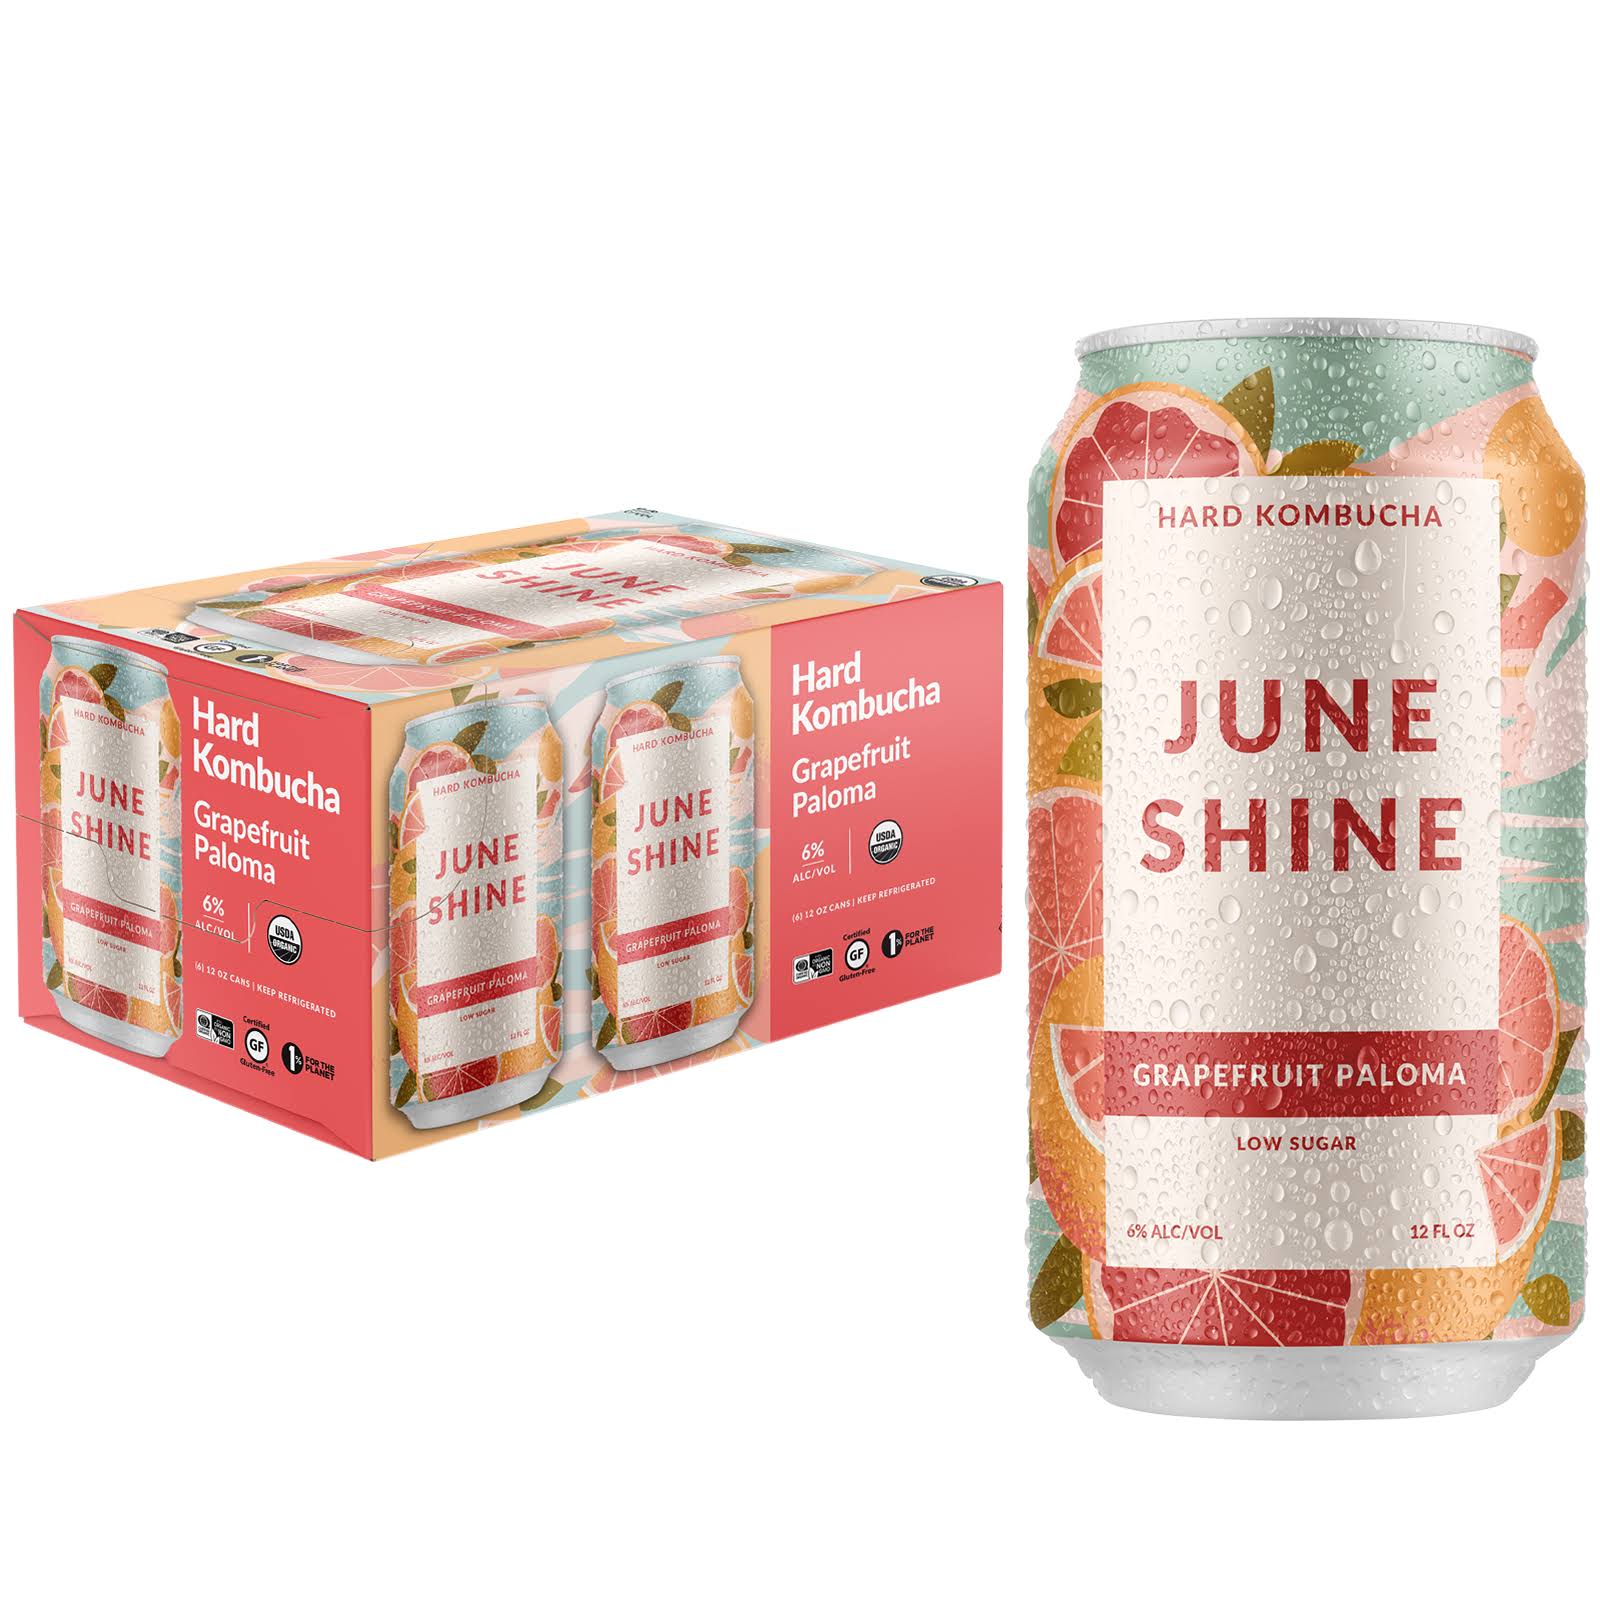 June Shine Hard Kombucha, Grapefruit Paloma - 6 pack, 12 fl oz cans